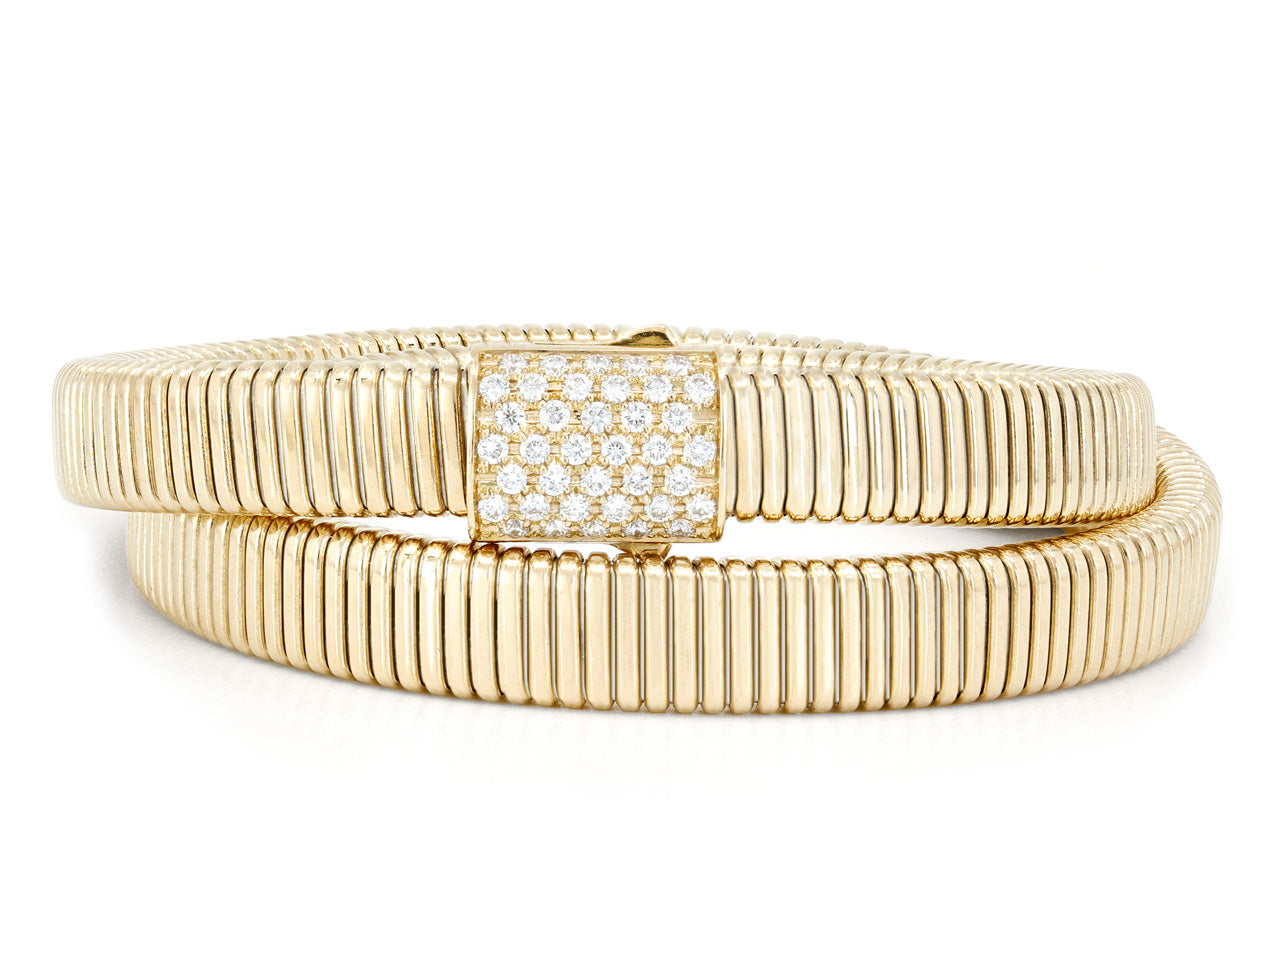 Beladora Diamond Double Wrap Tubogas Bracelet in 18K Gold